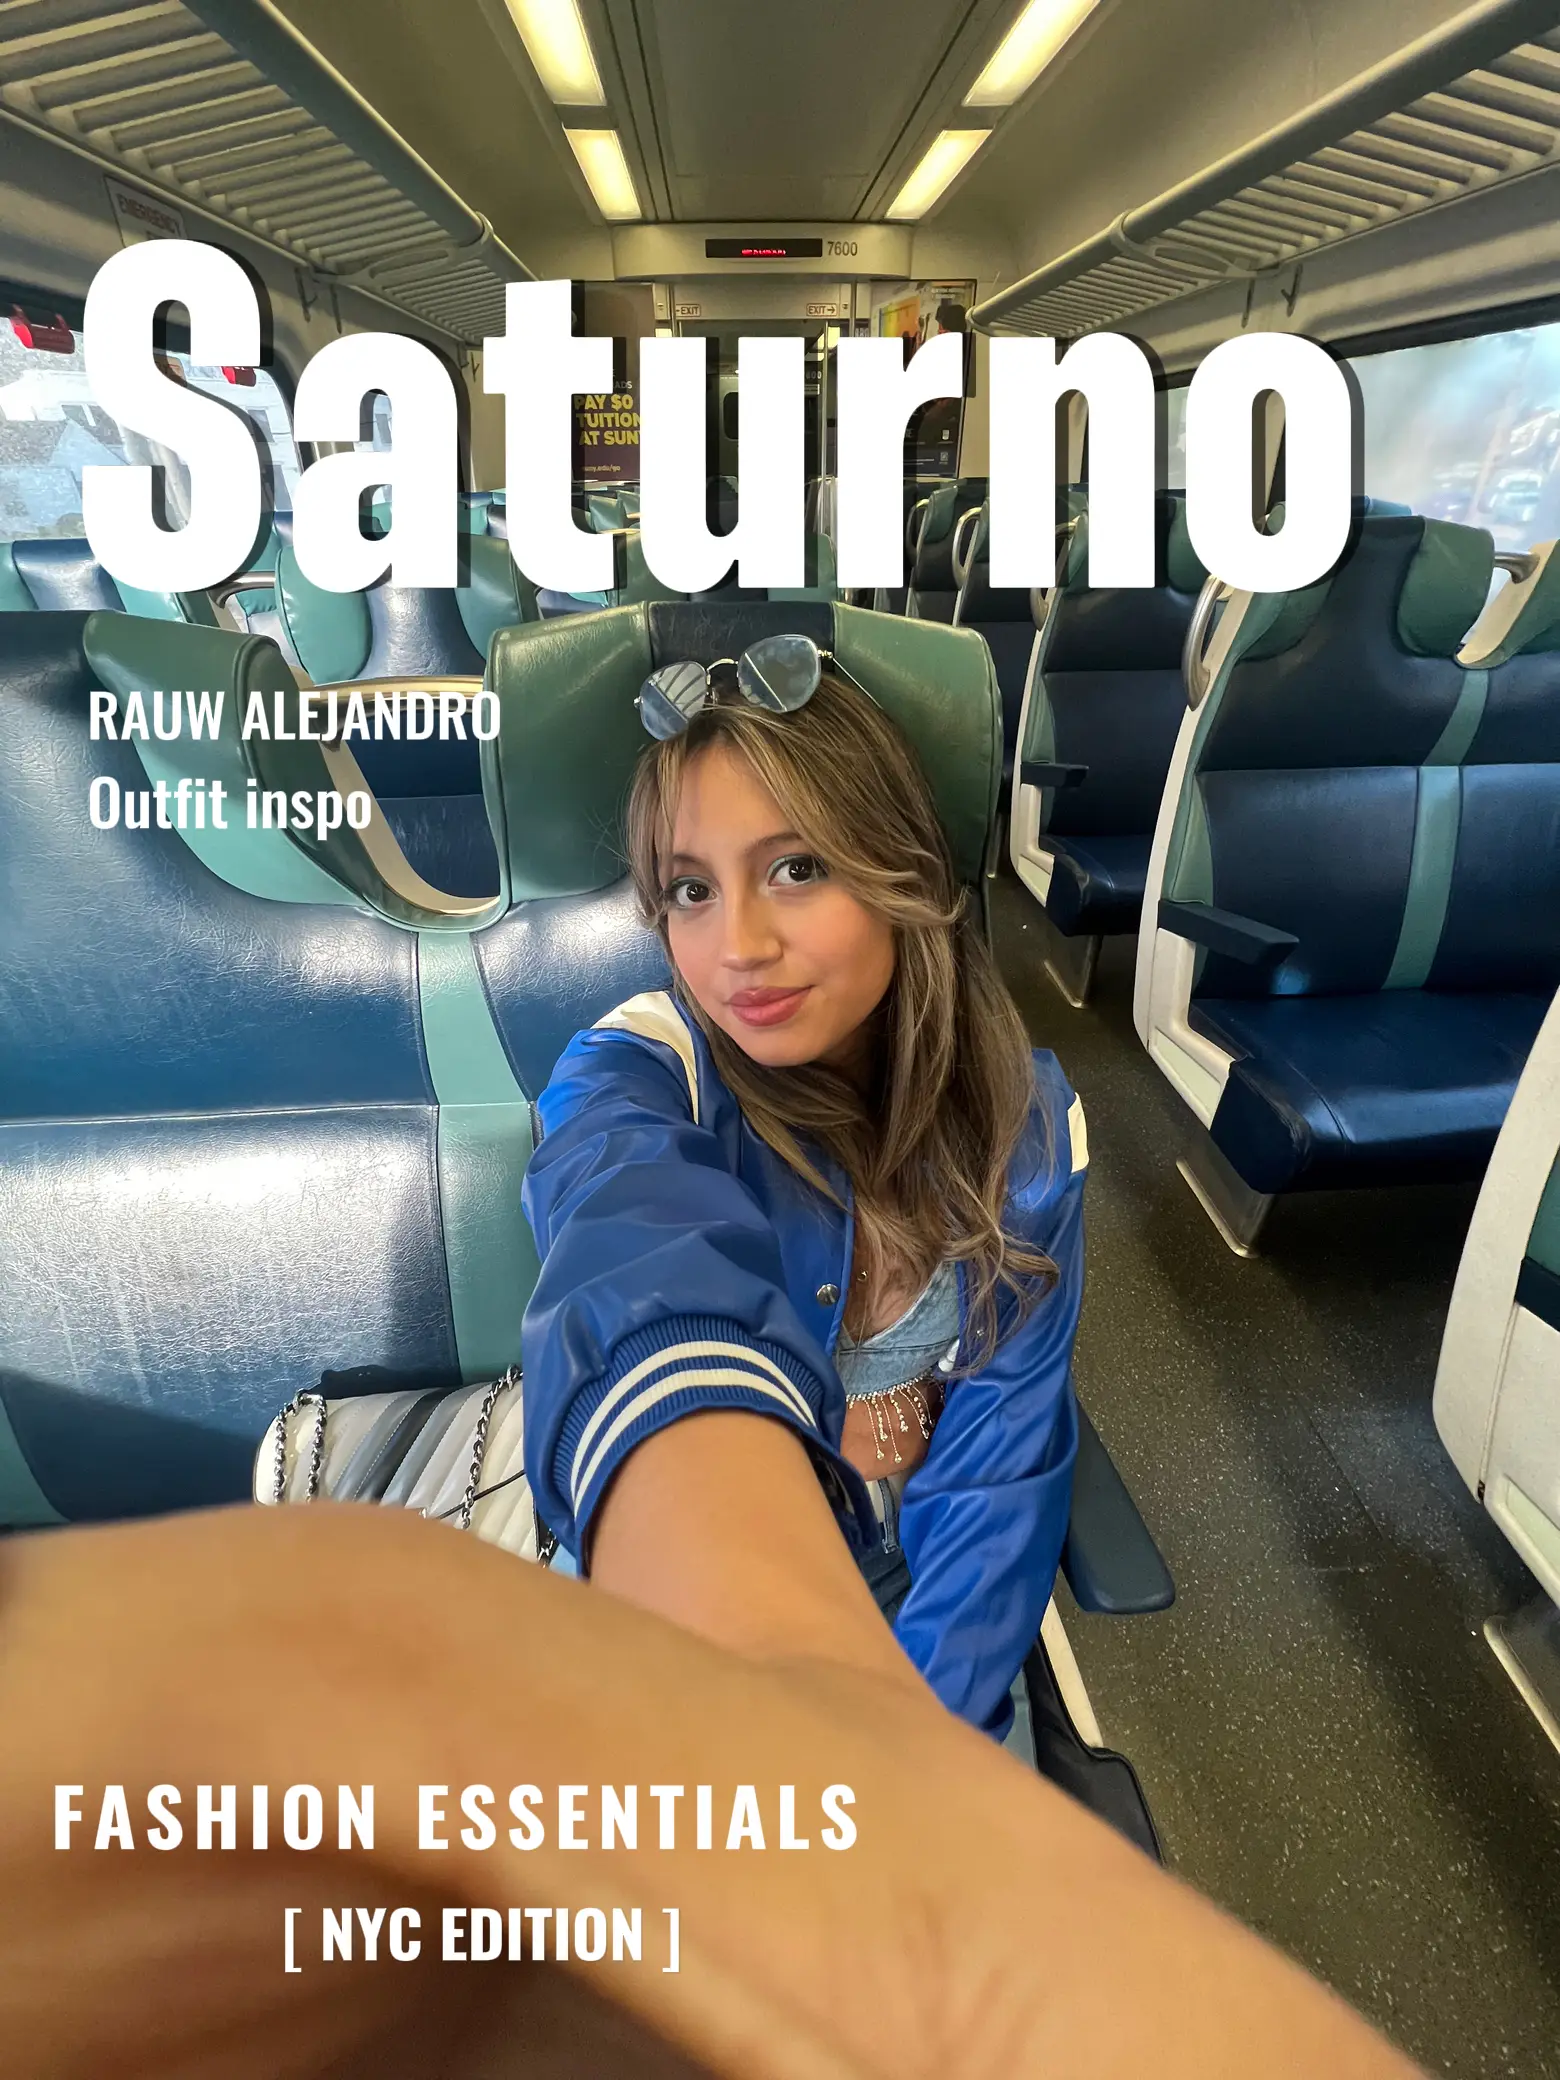 El album experimental de Rauw Alejandro: “Saturno” – The Wichitan